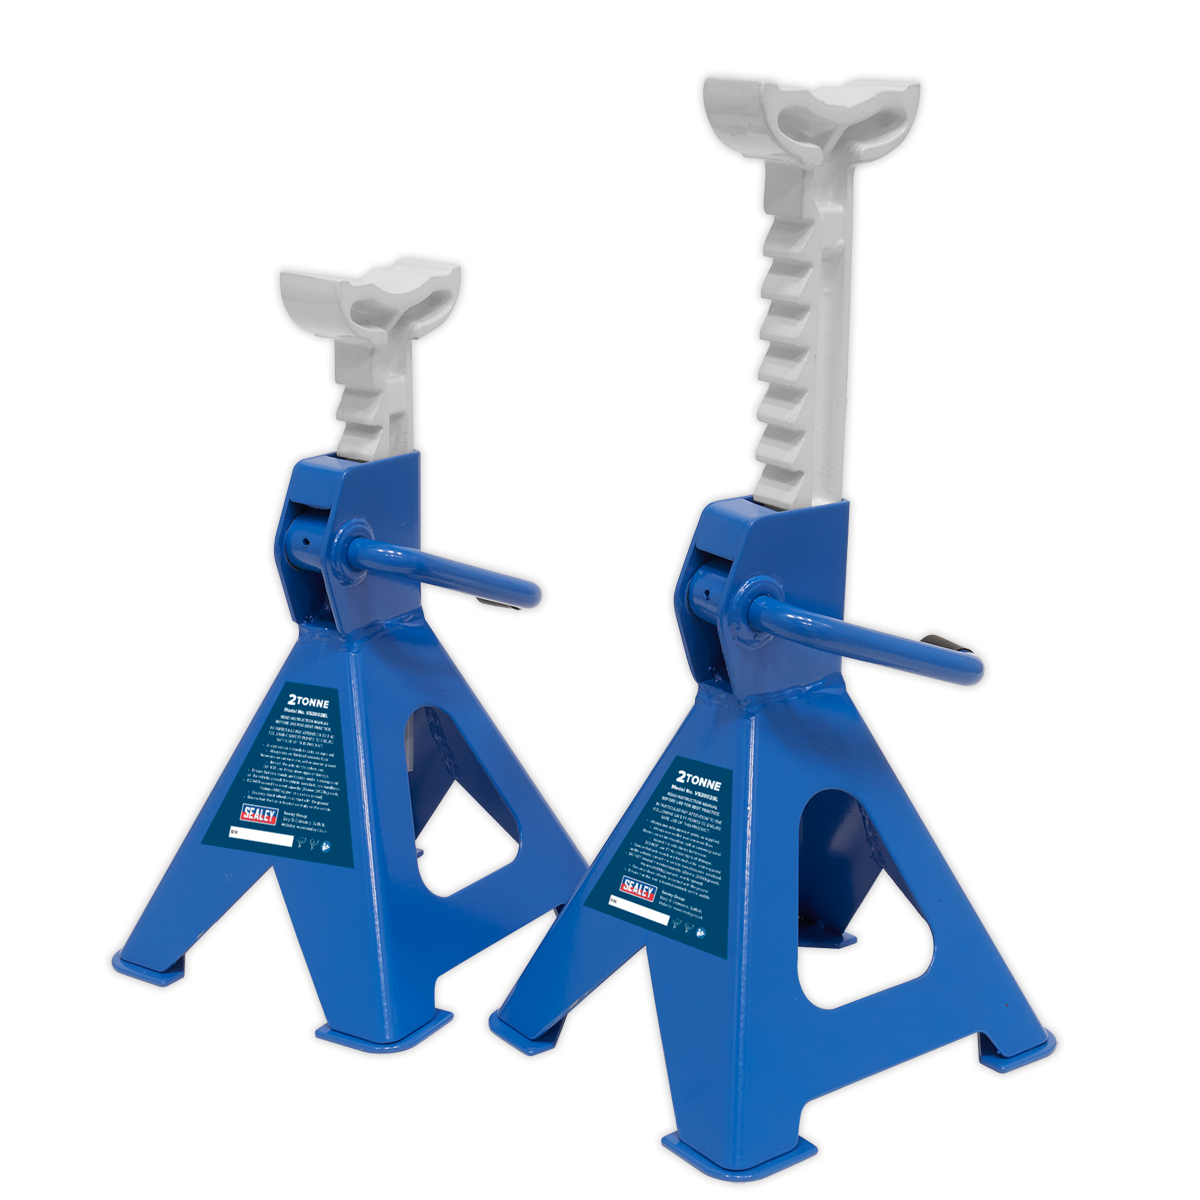 Axle Stands (Pair) 2 Tonne Capacity per Stand Ratchet Type - Blue - VS2002BL - Farming Parts